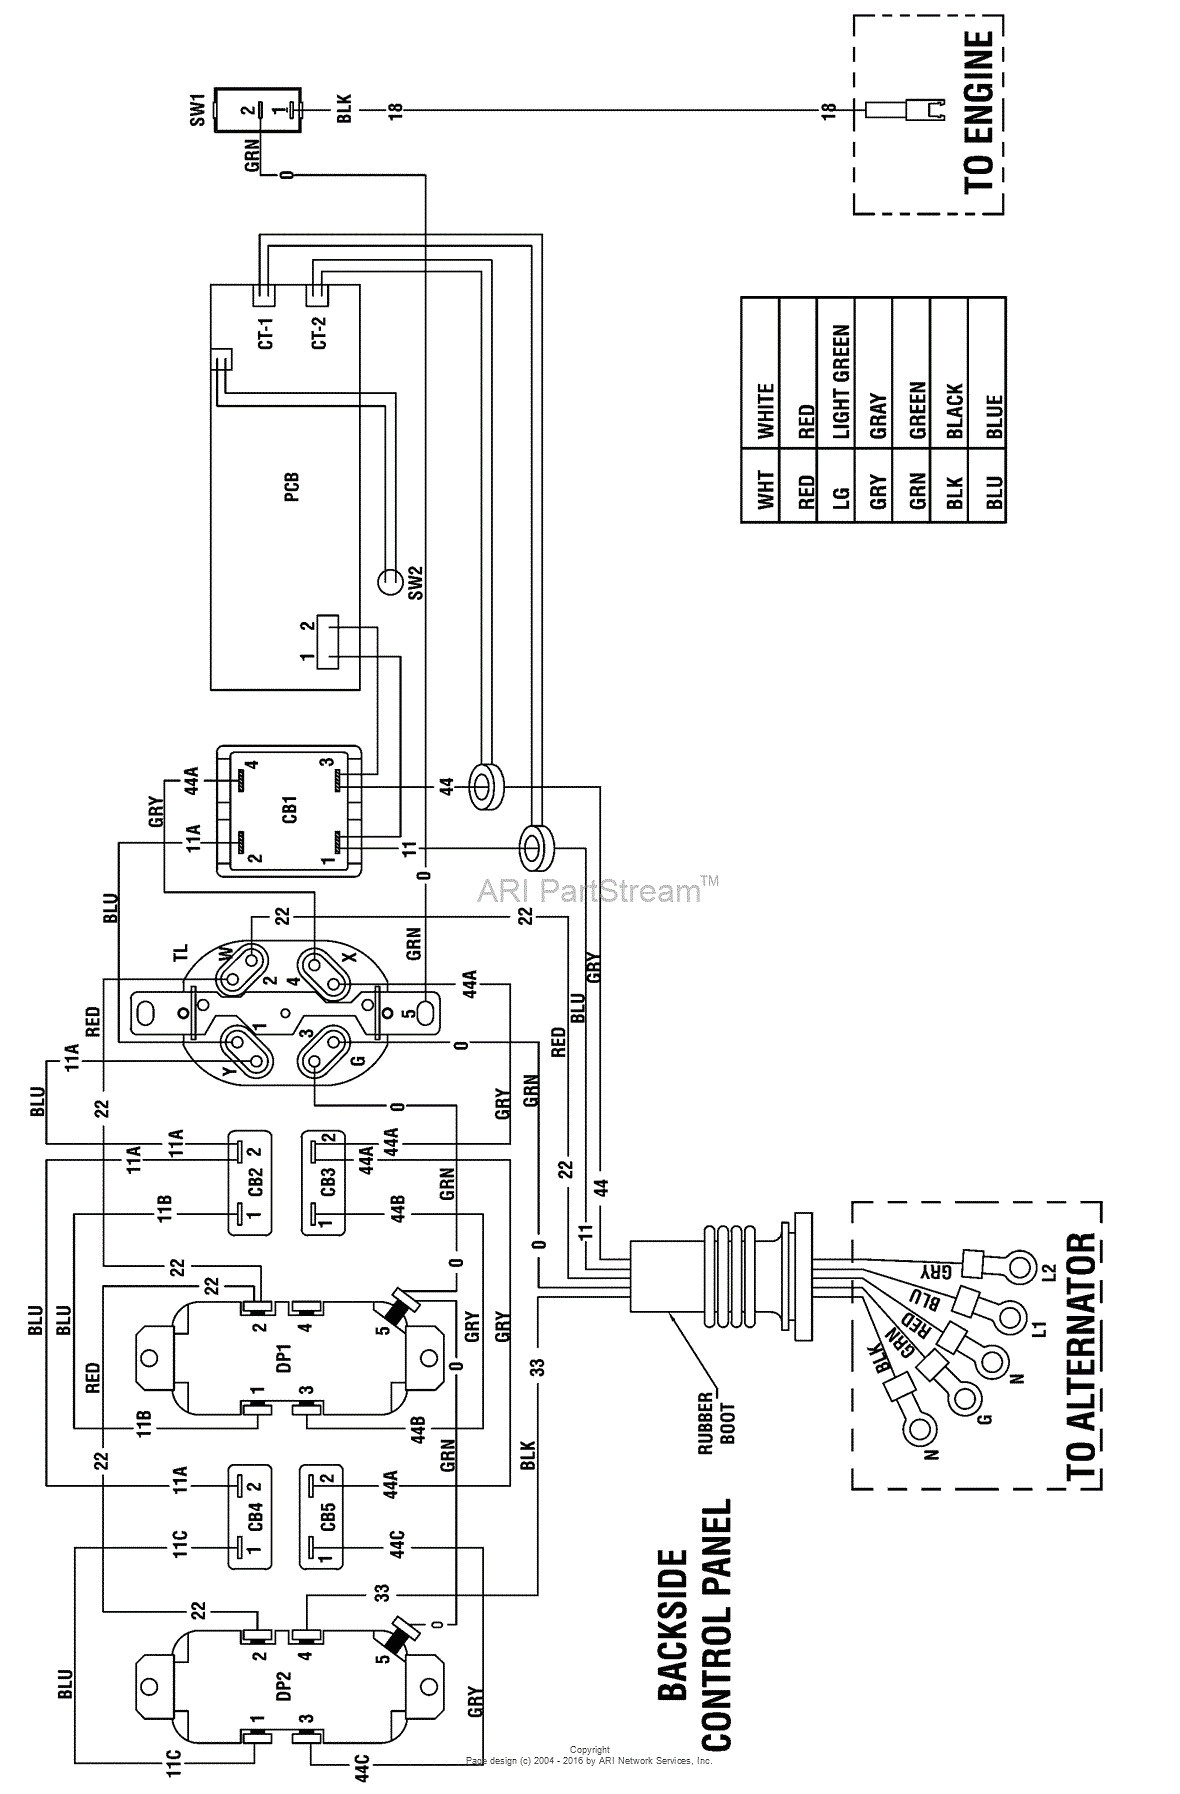 briggs and stratton alternator wiring diagram new wiring diagram briggs stratton engine archives gidn co best of briggs and stratton alternator wiring diagram jpg